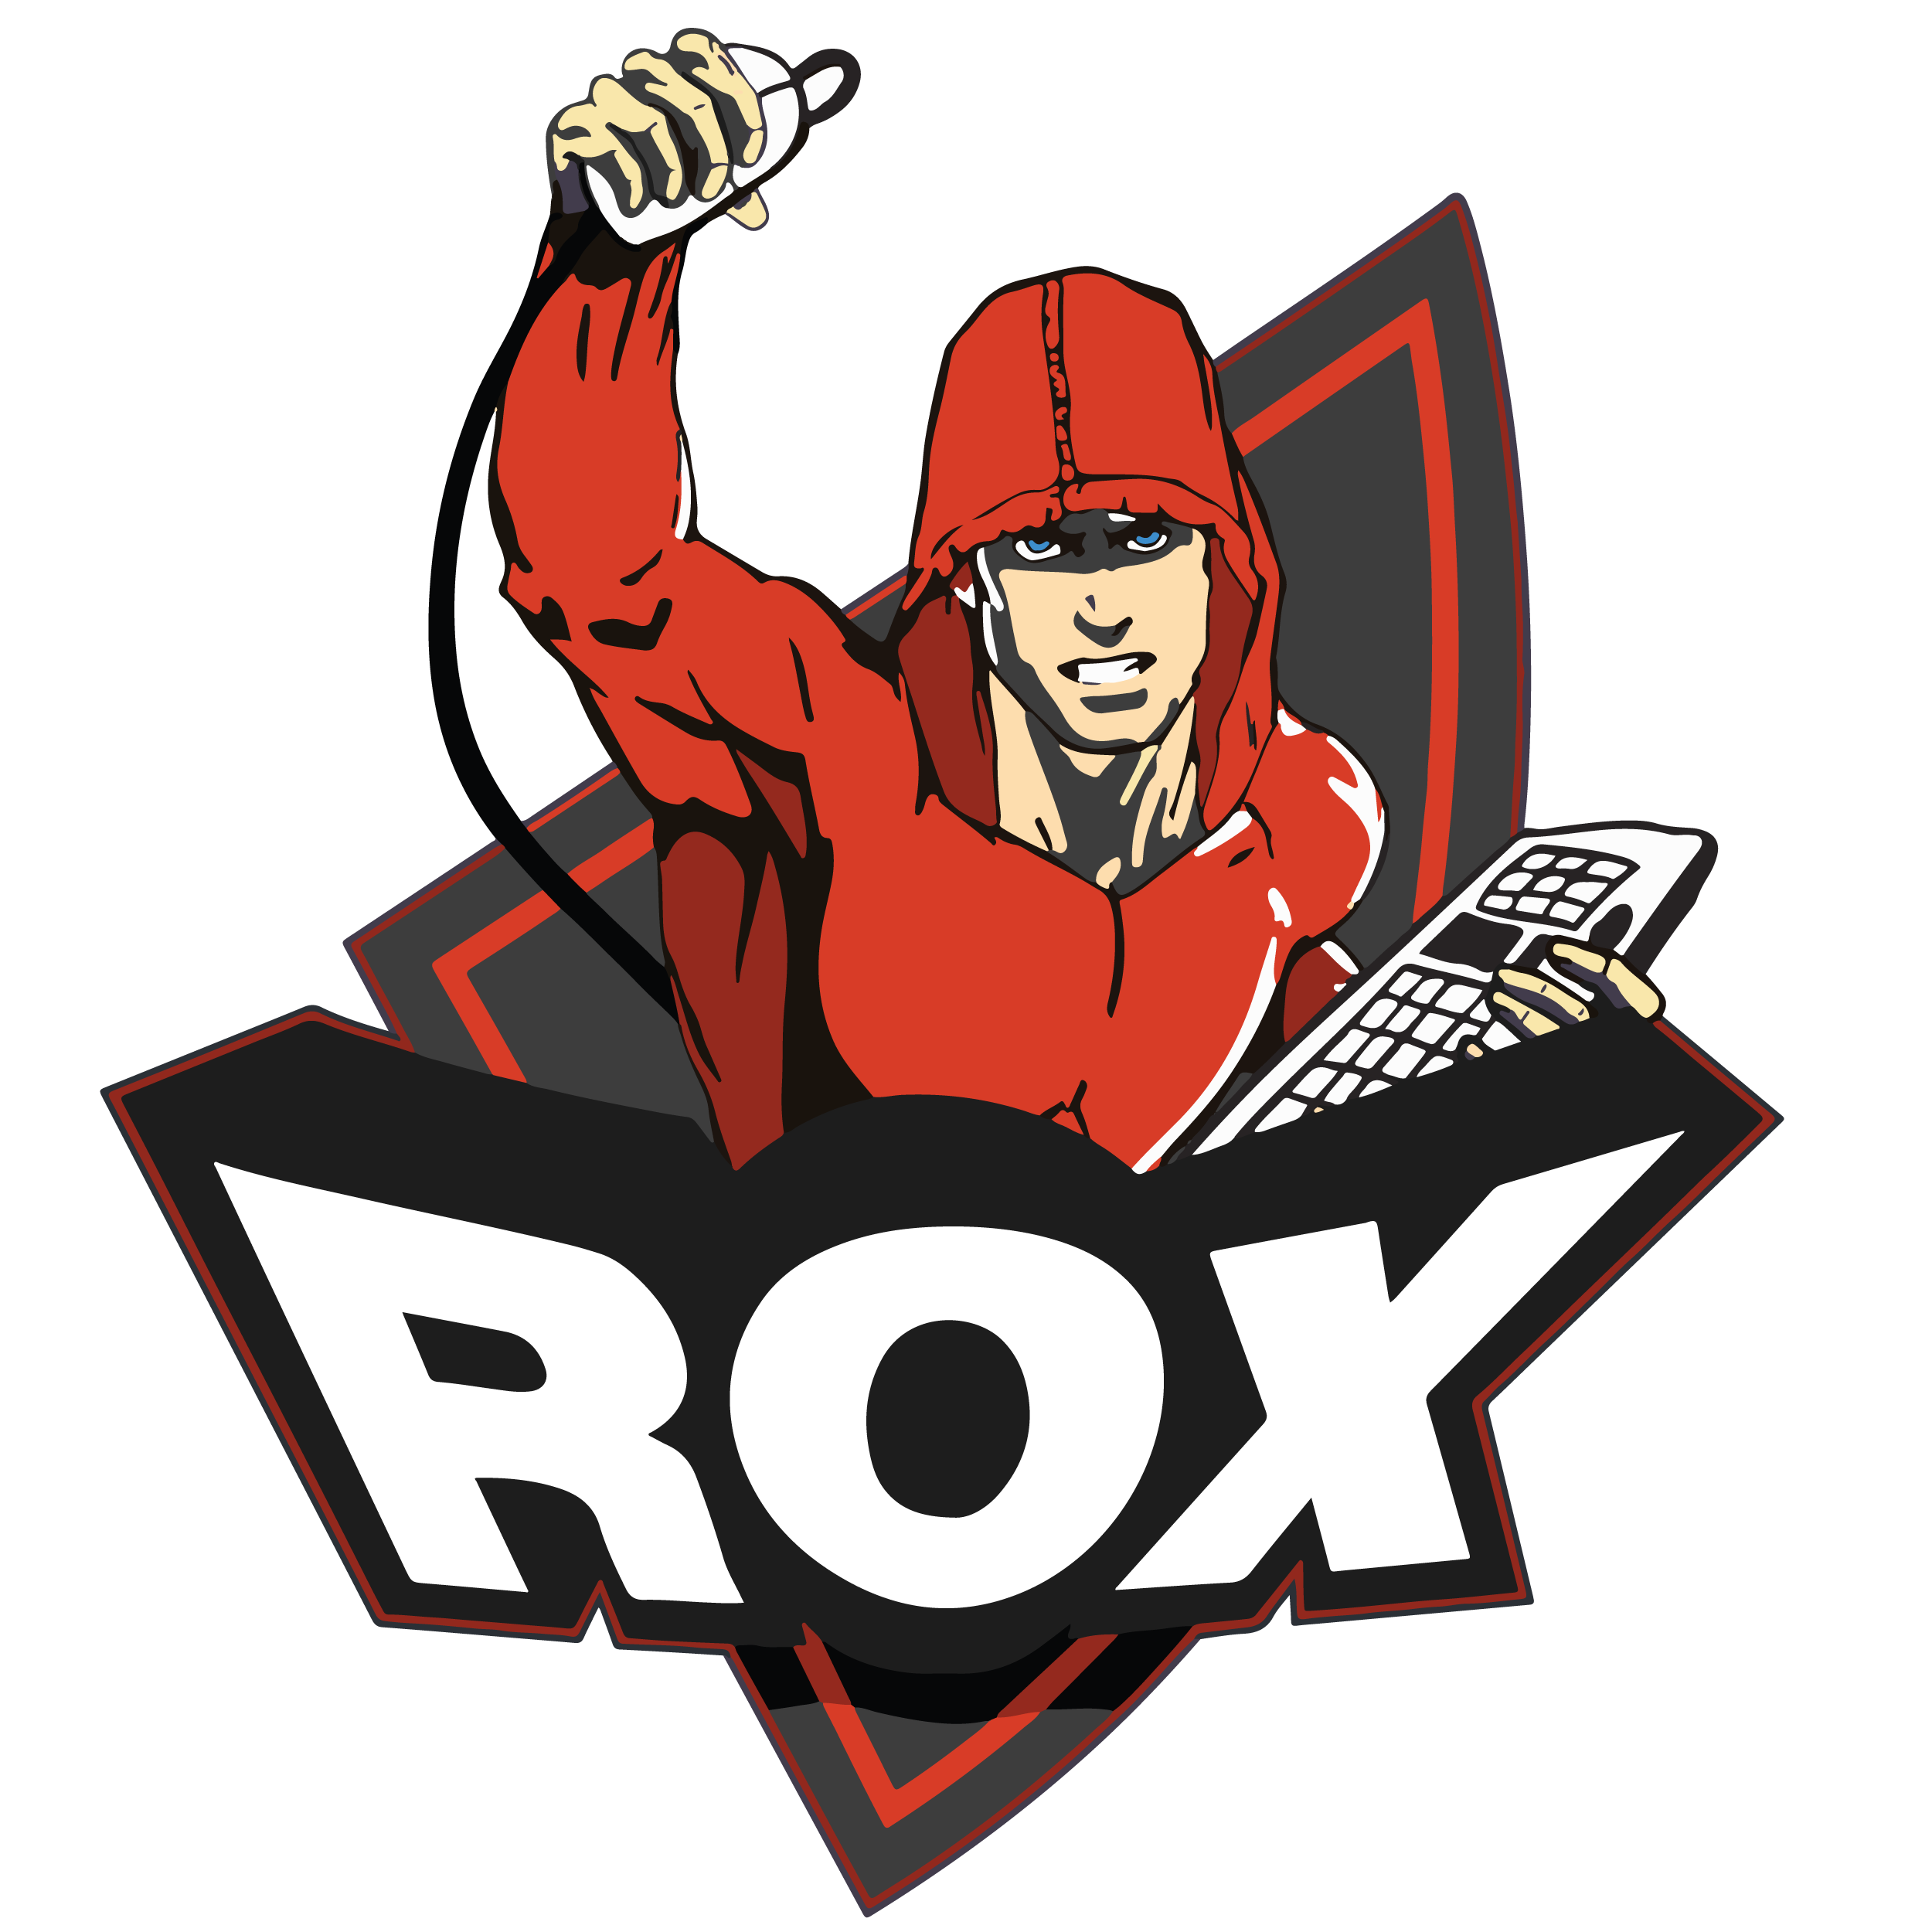 Сайт rox rox games com. Rox. Rox лого. Логотипы команд для игр.